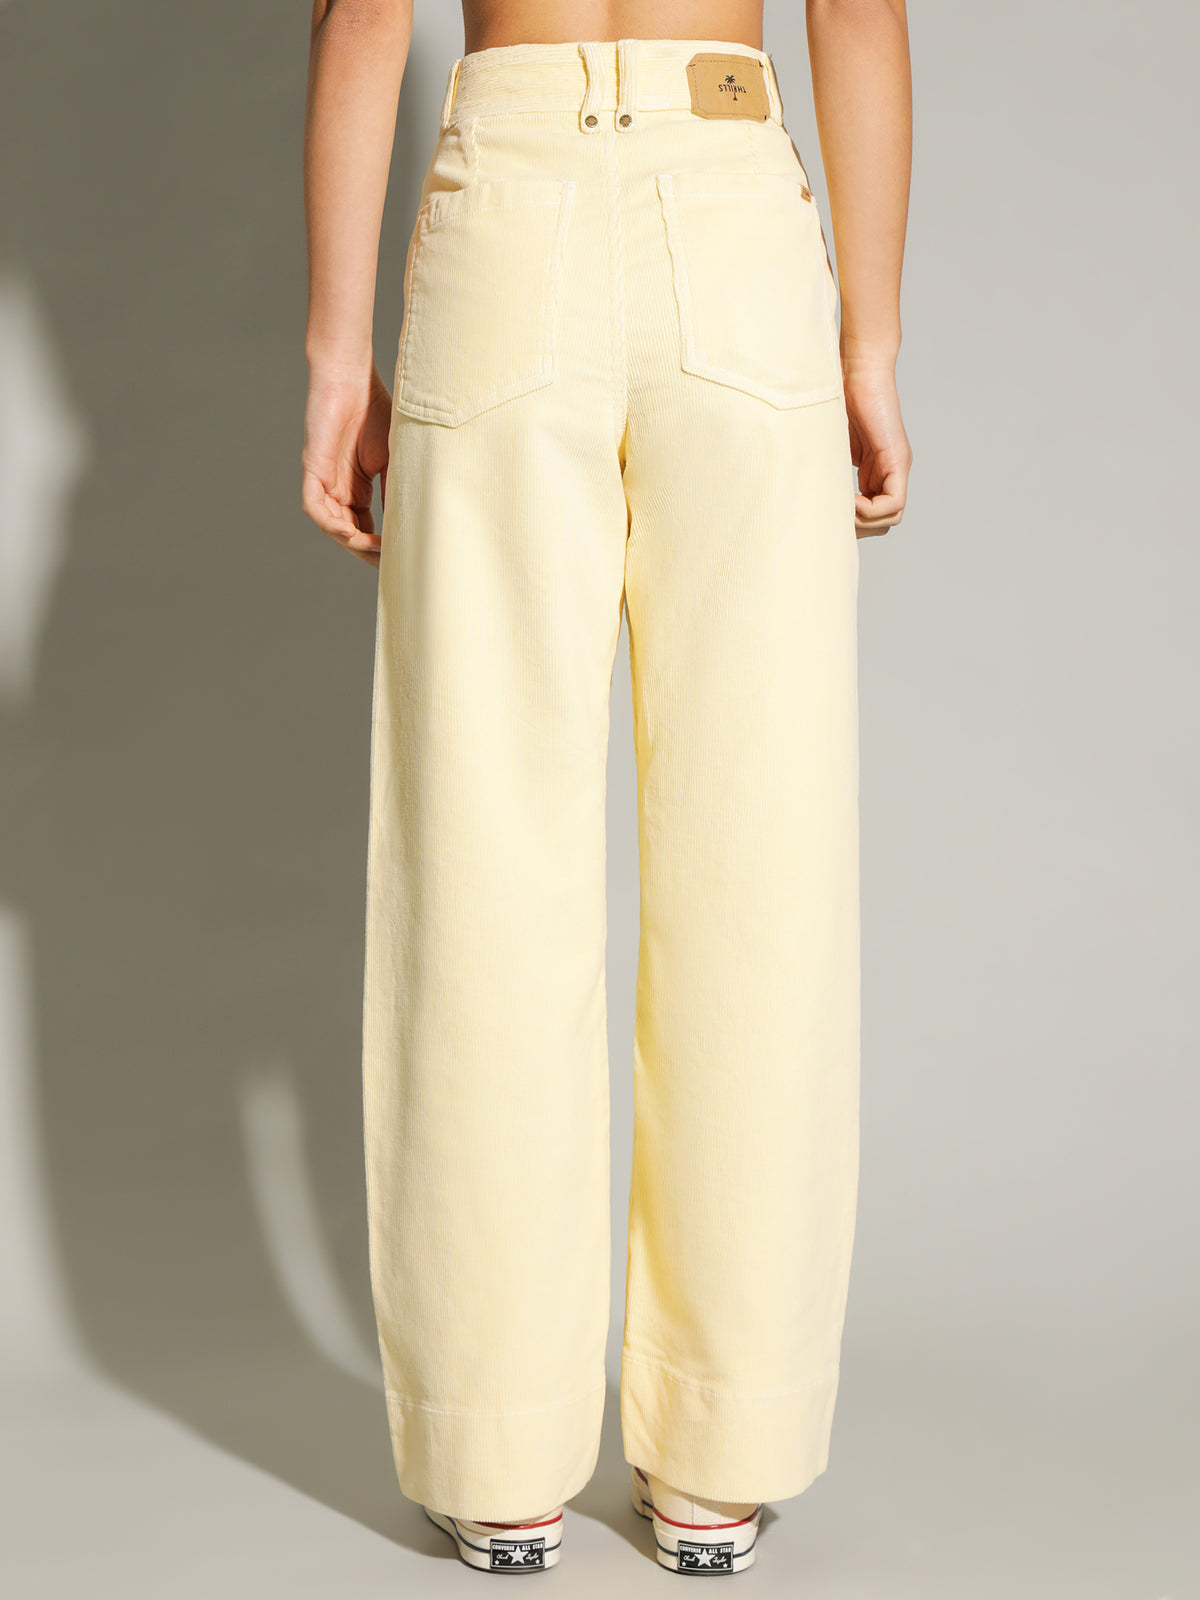 Belle Full Length Cord Pants in Sunlight Yellow